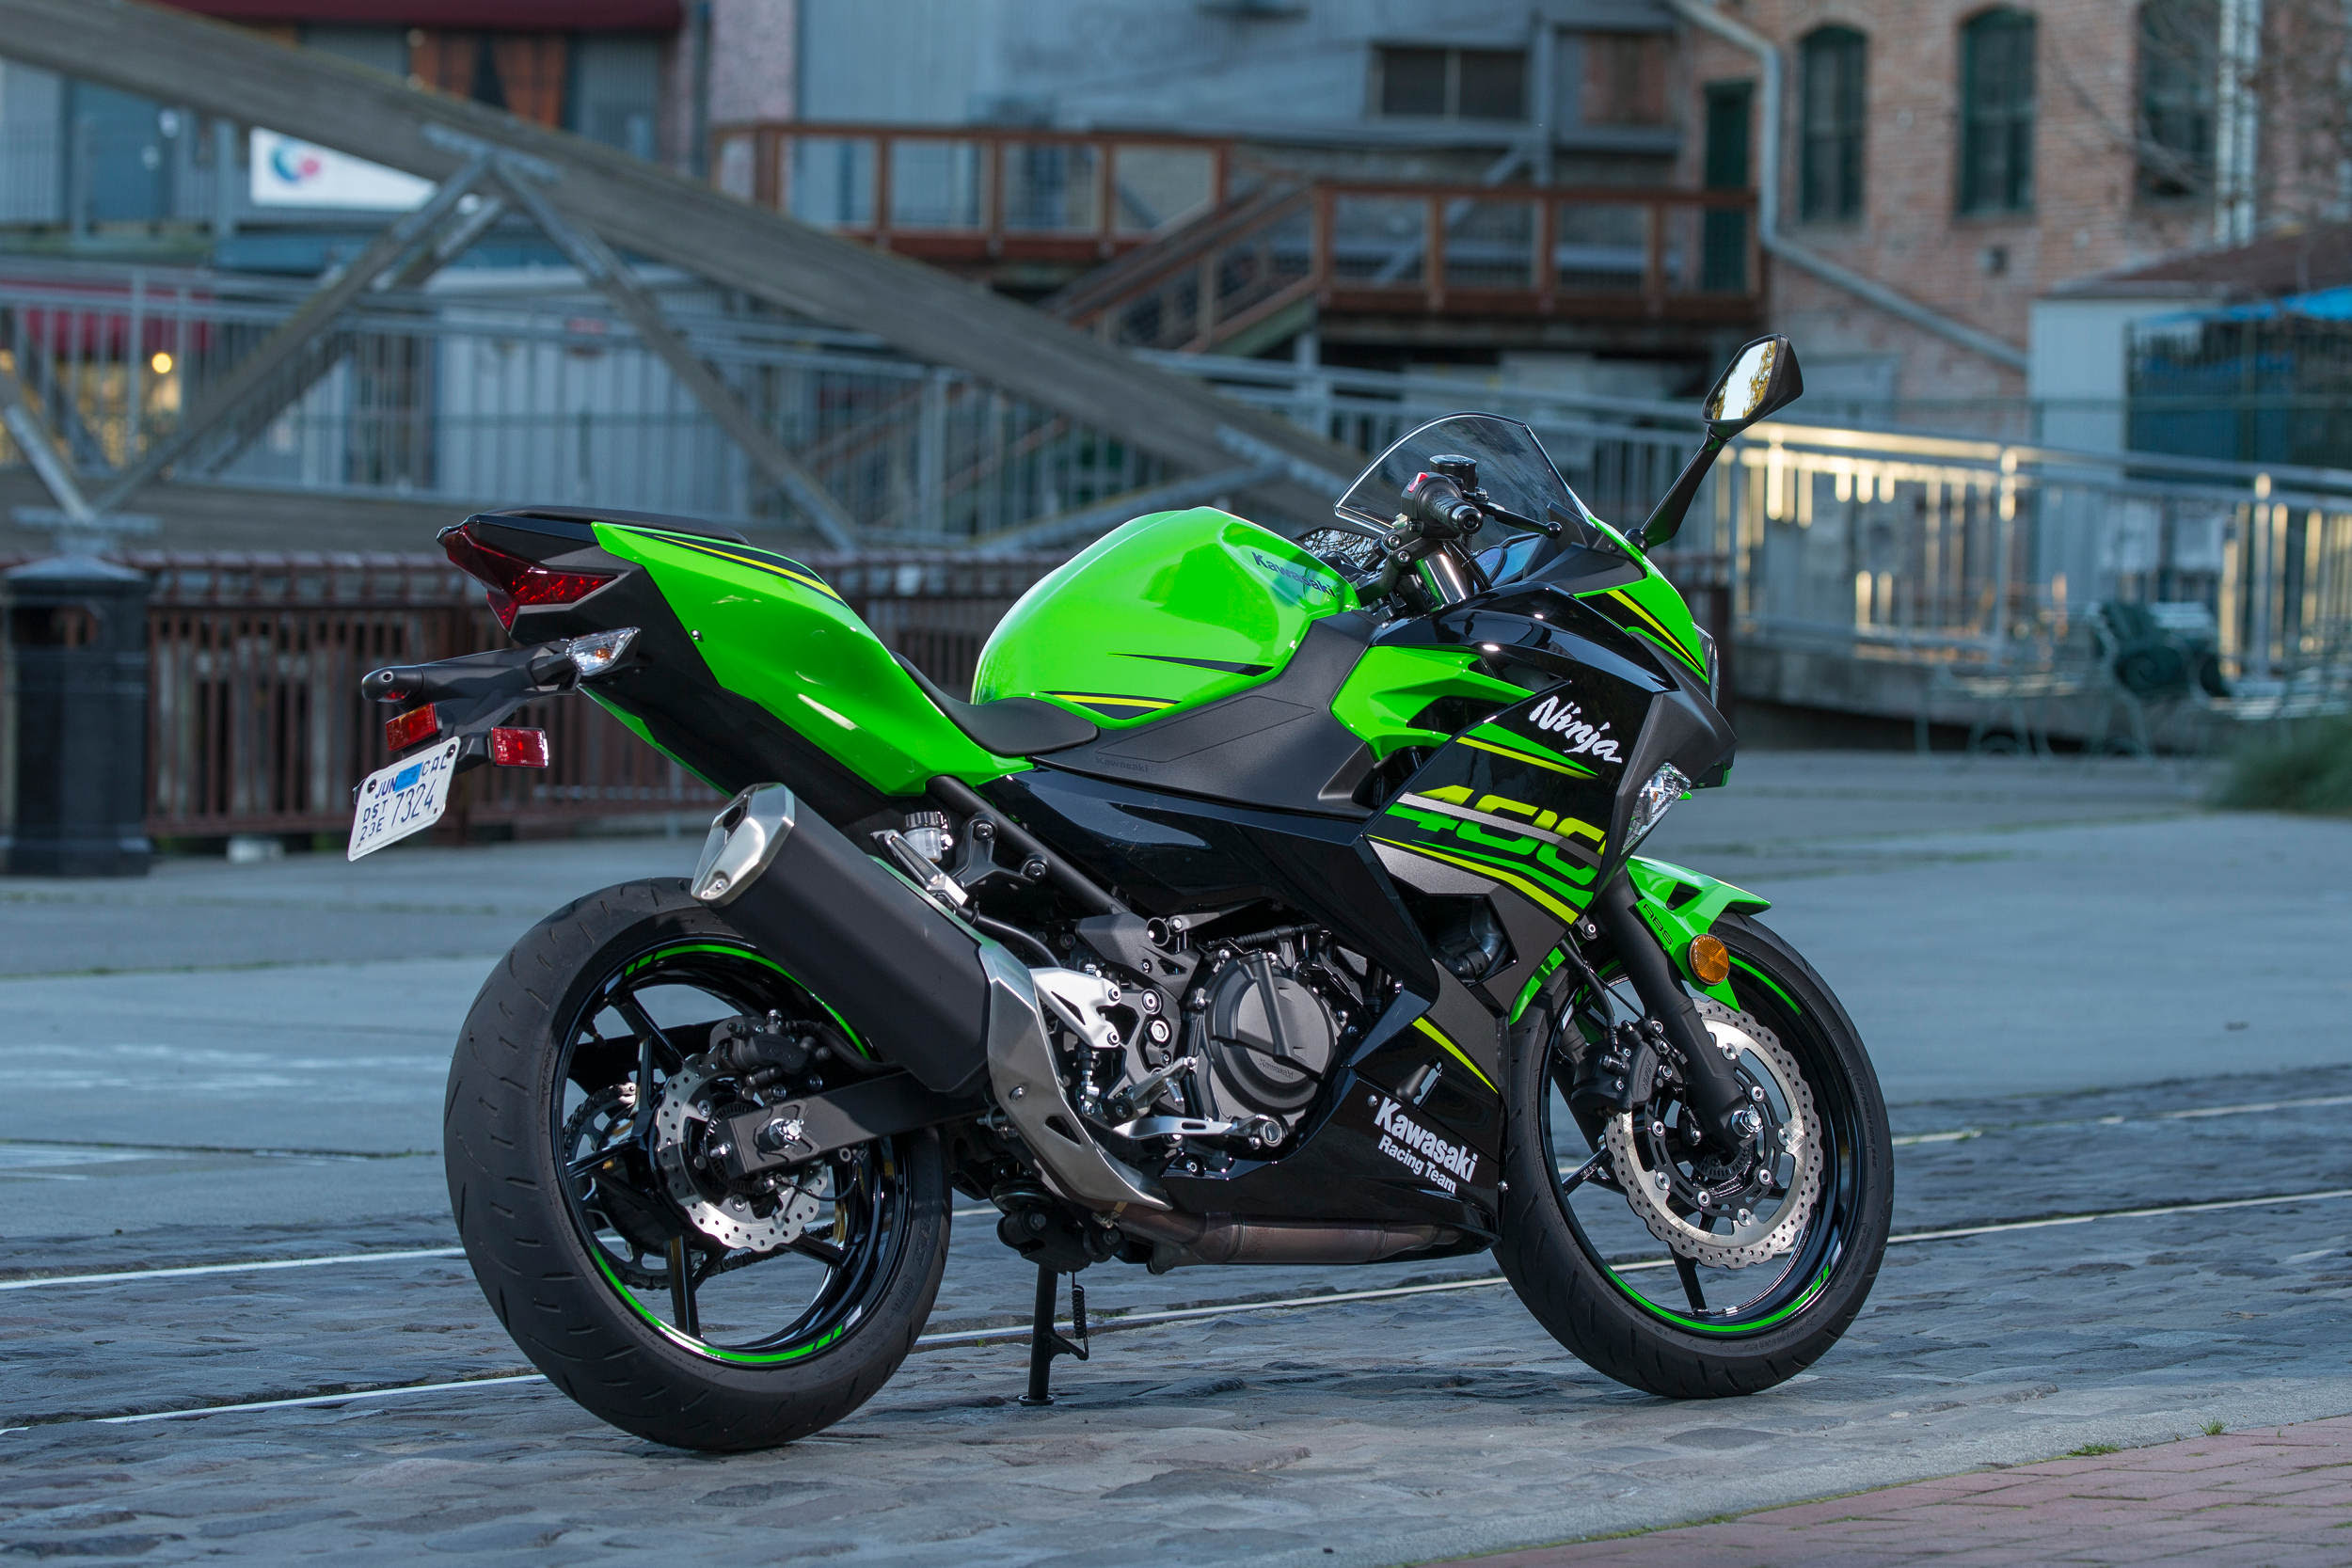 Kawasaki Ninja 400r Top Speed - Best Auto Reviews